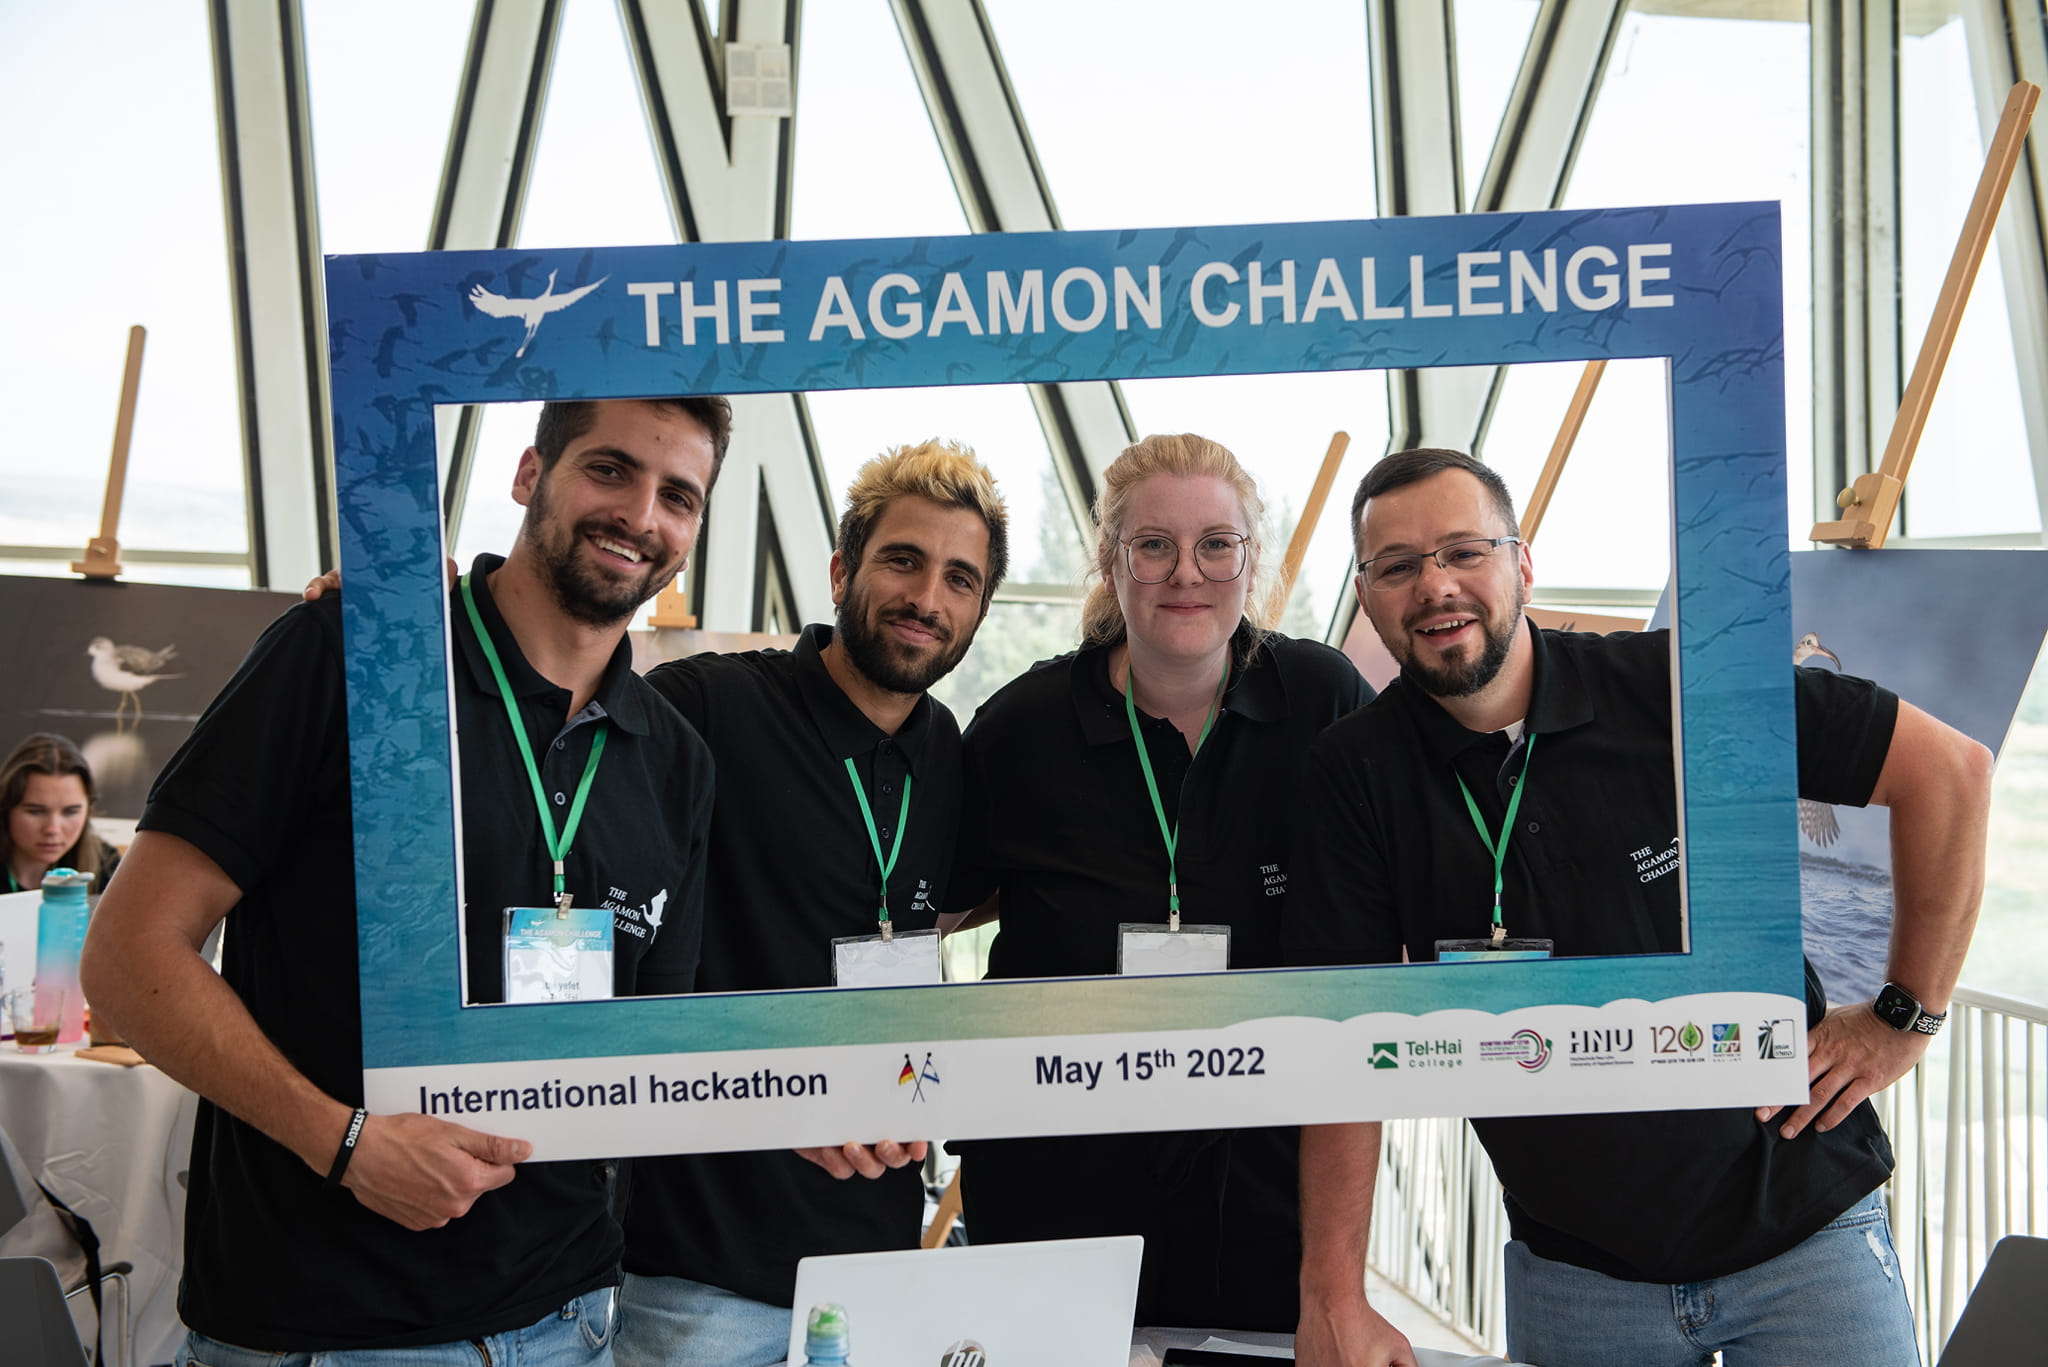 The Agamon Challenge